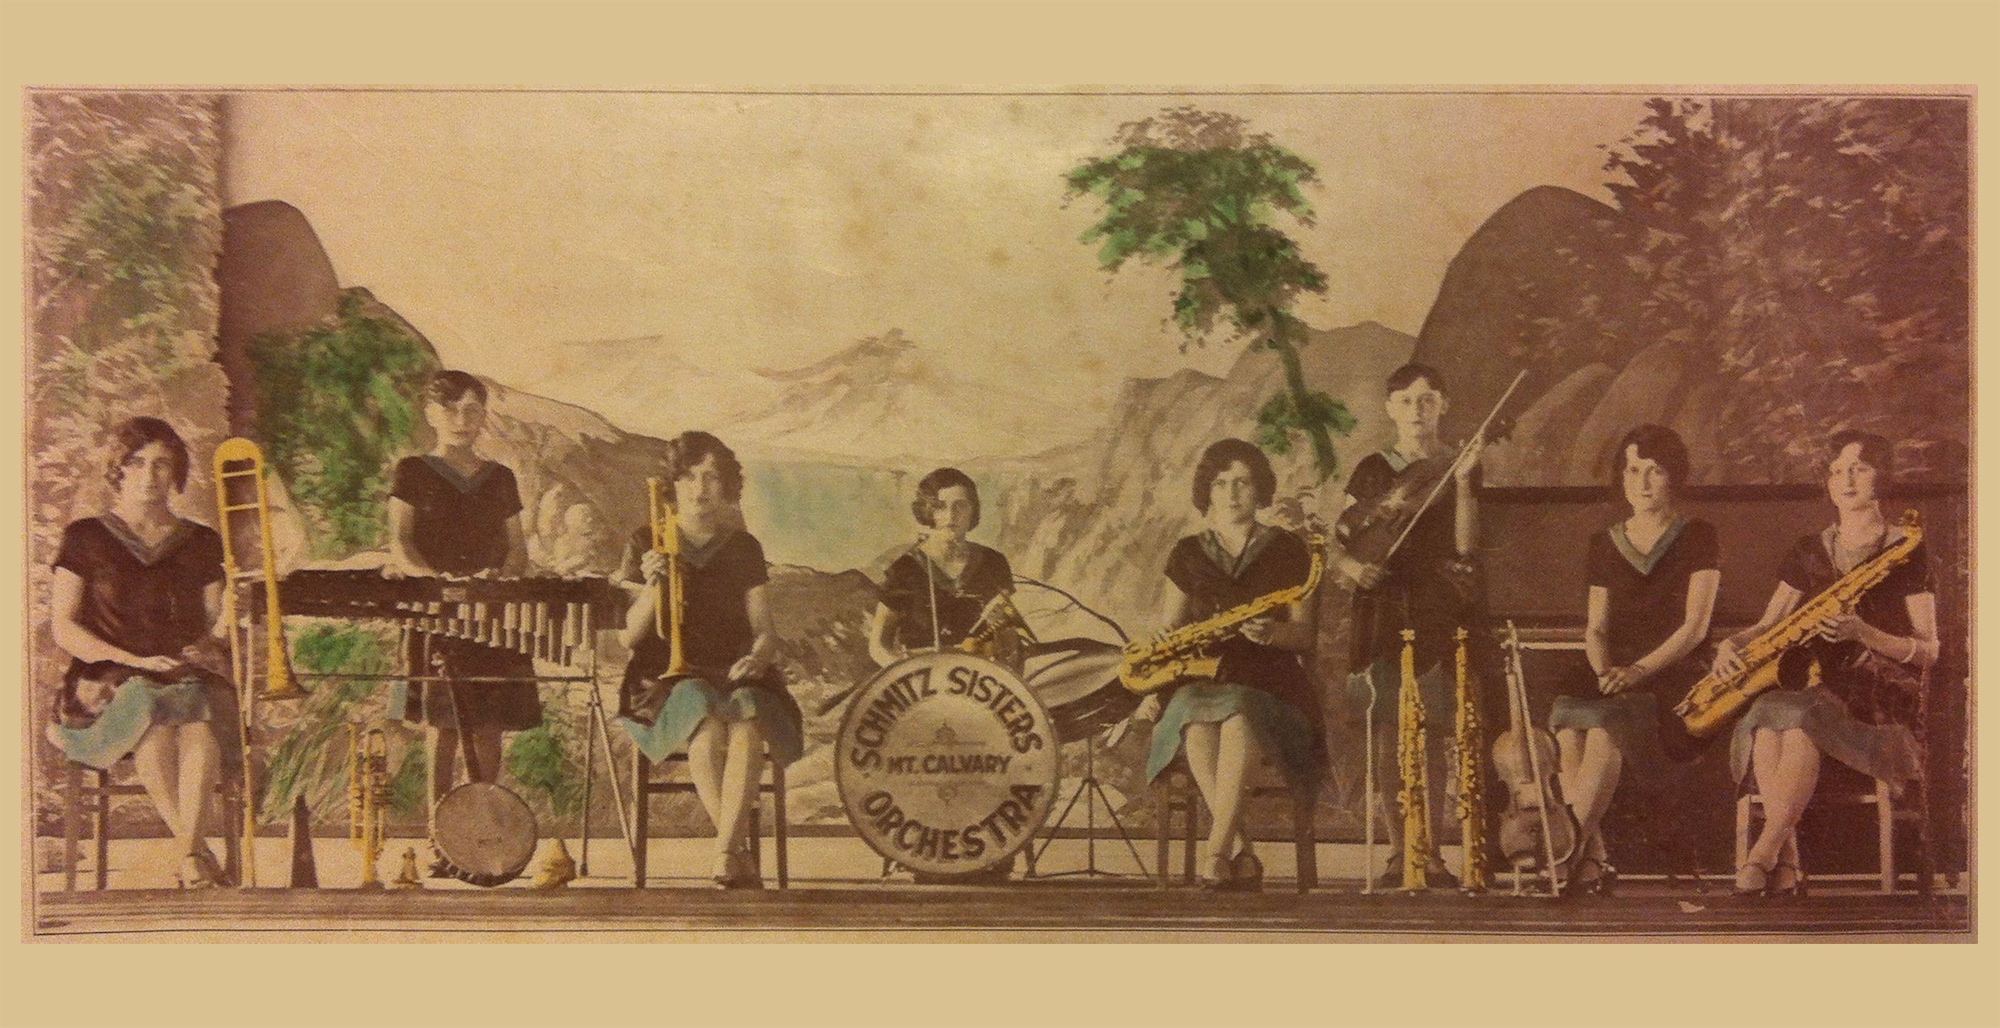 Schmitz Sisters Orchestra mid-1920s postcard.